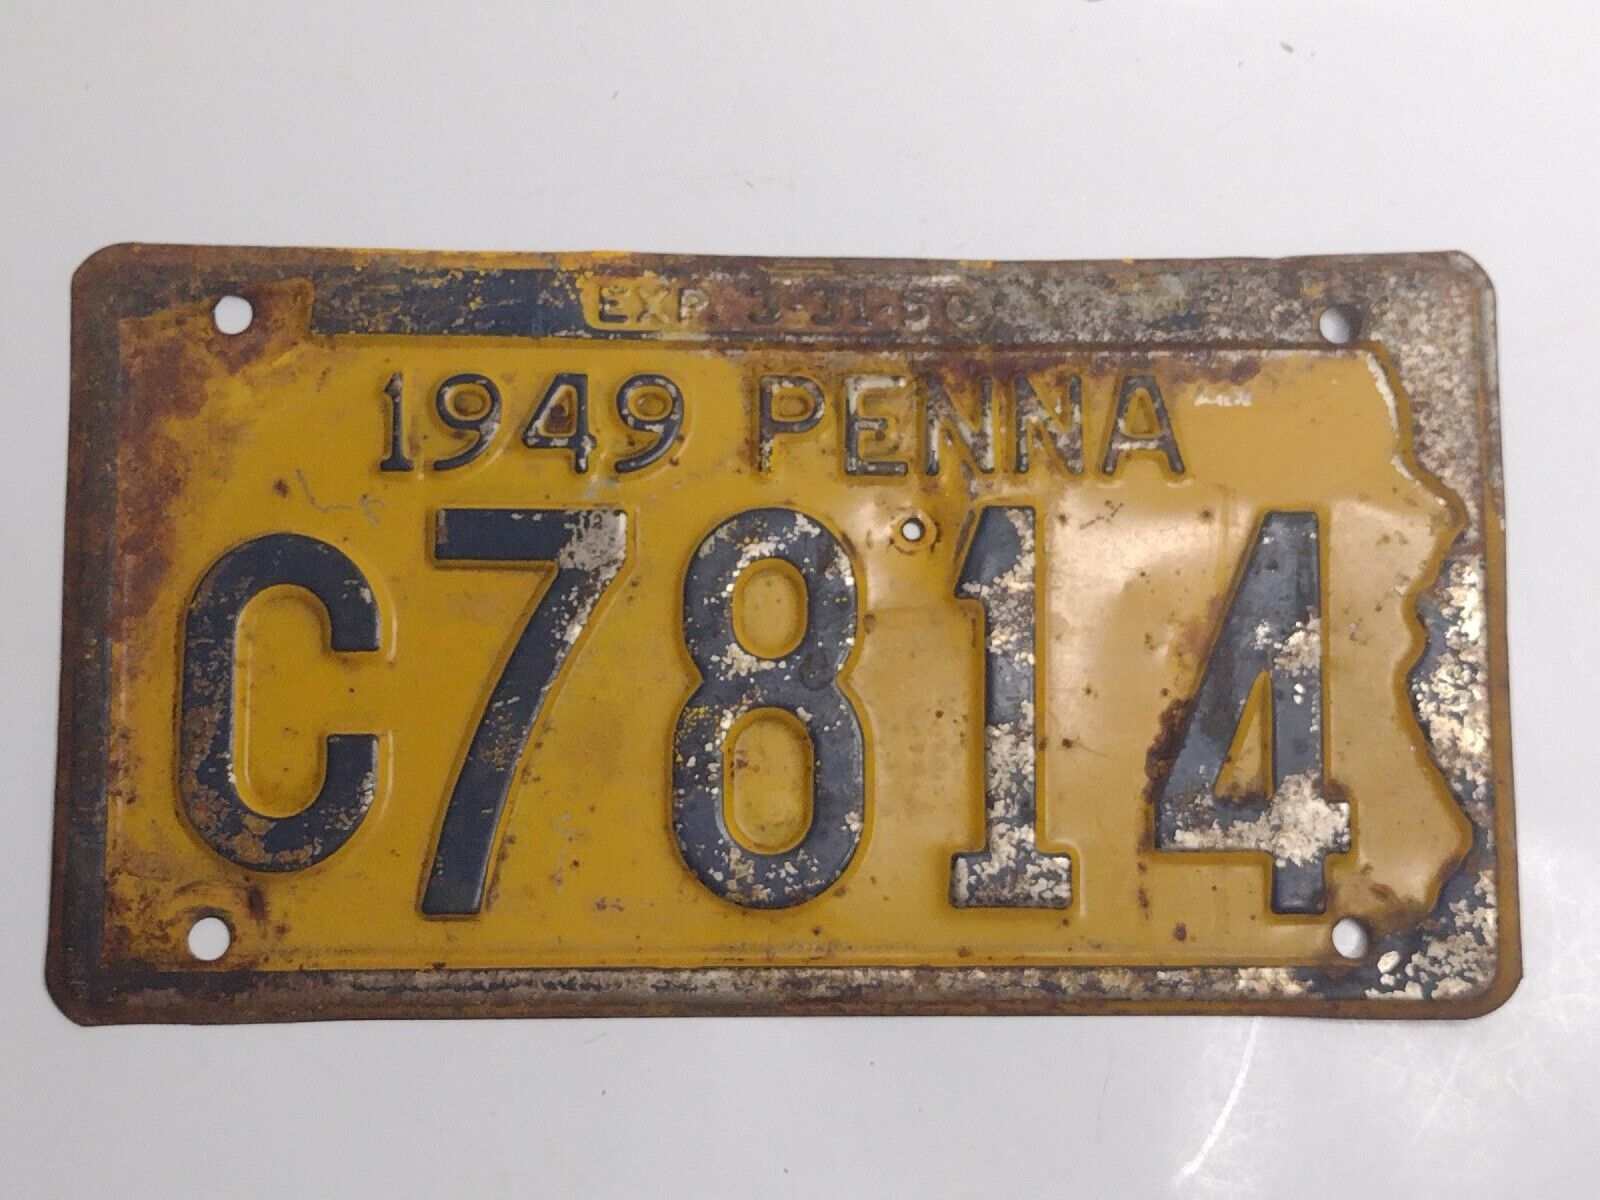 Vintage 1949 Pennsylvania License Plate C7814 PENNA